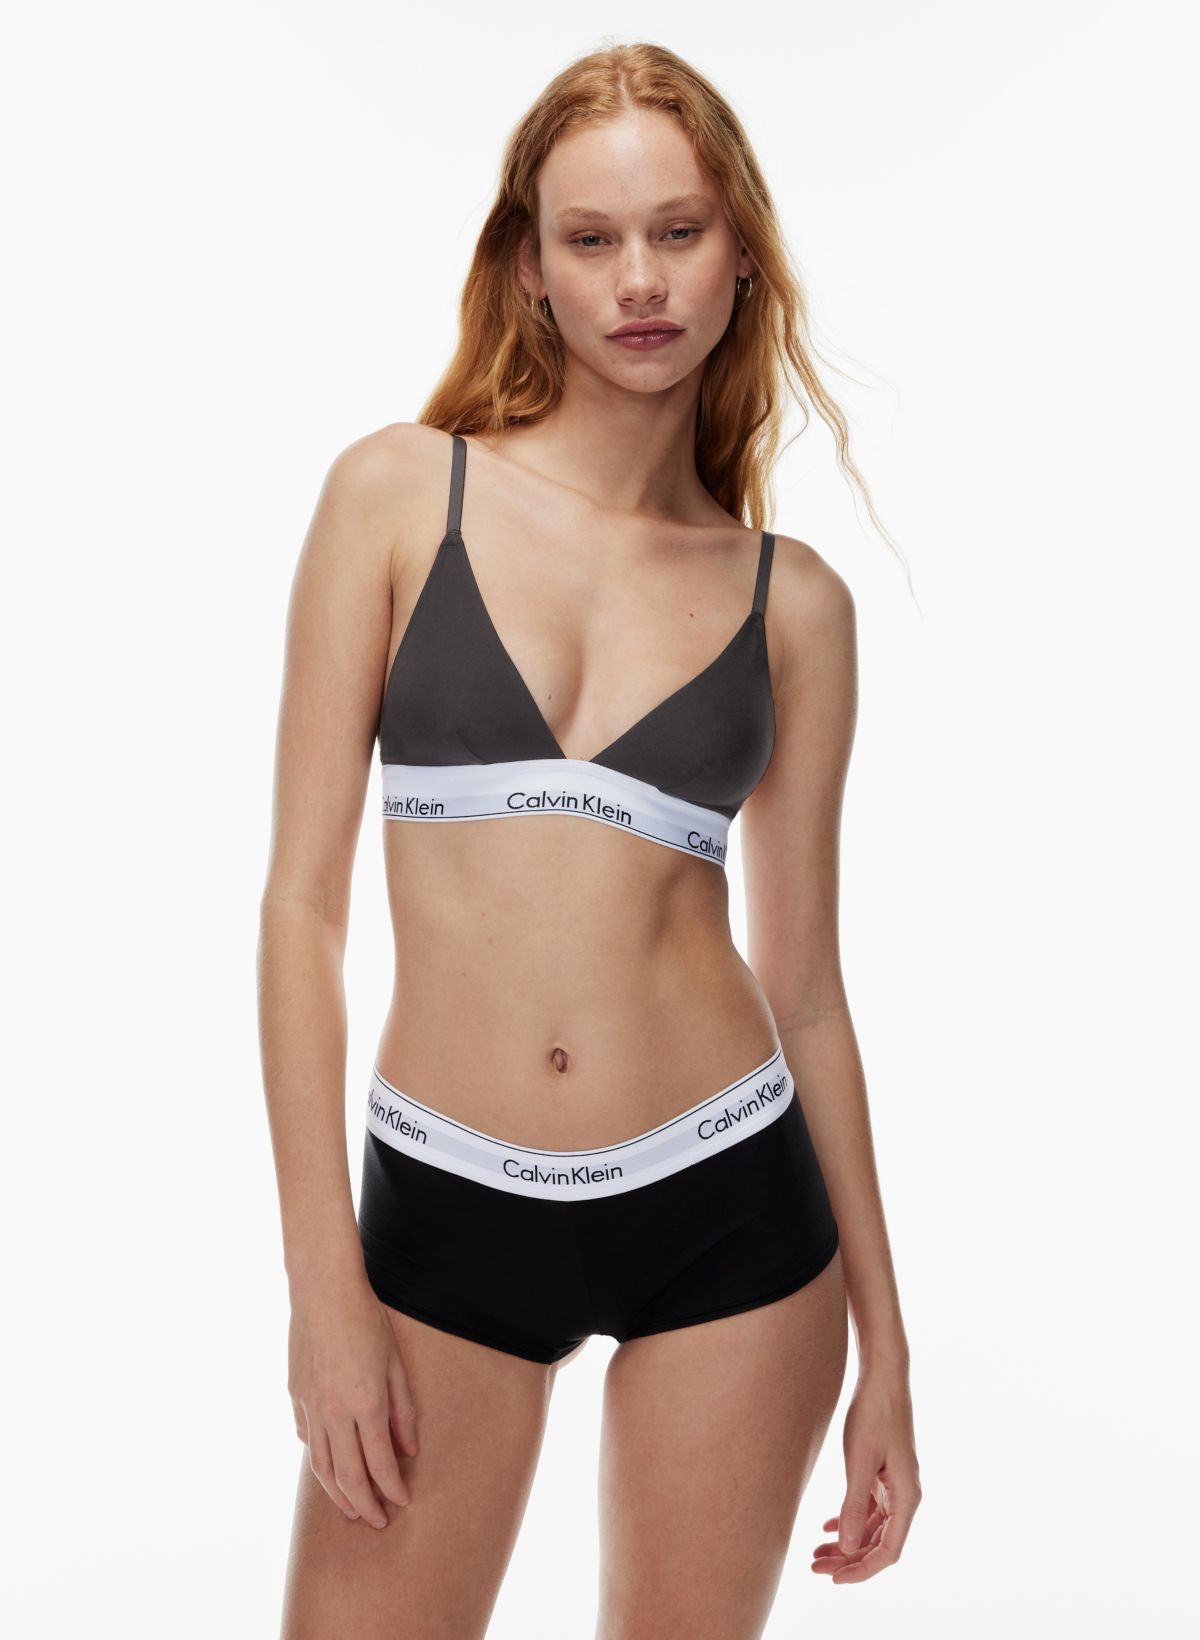 Calvin Klein Women's Modern Cotton Bralette and Bikini Set, White, X-Small